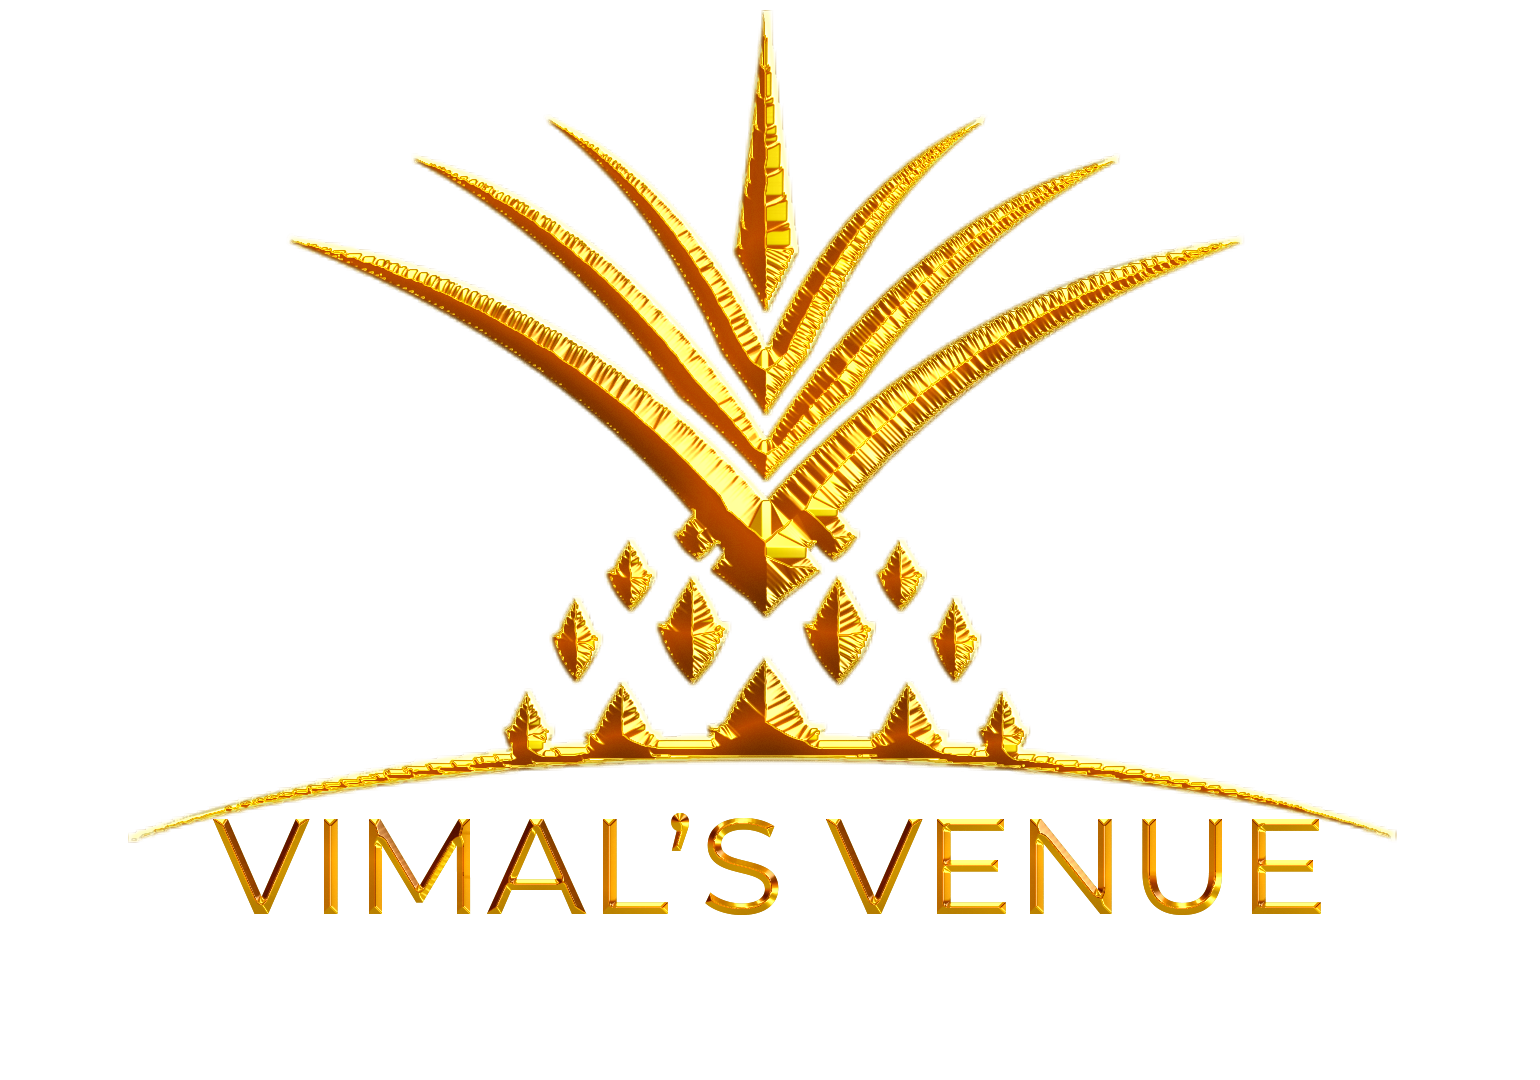 Vimals-Venue-logo-1-1